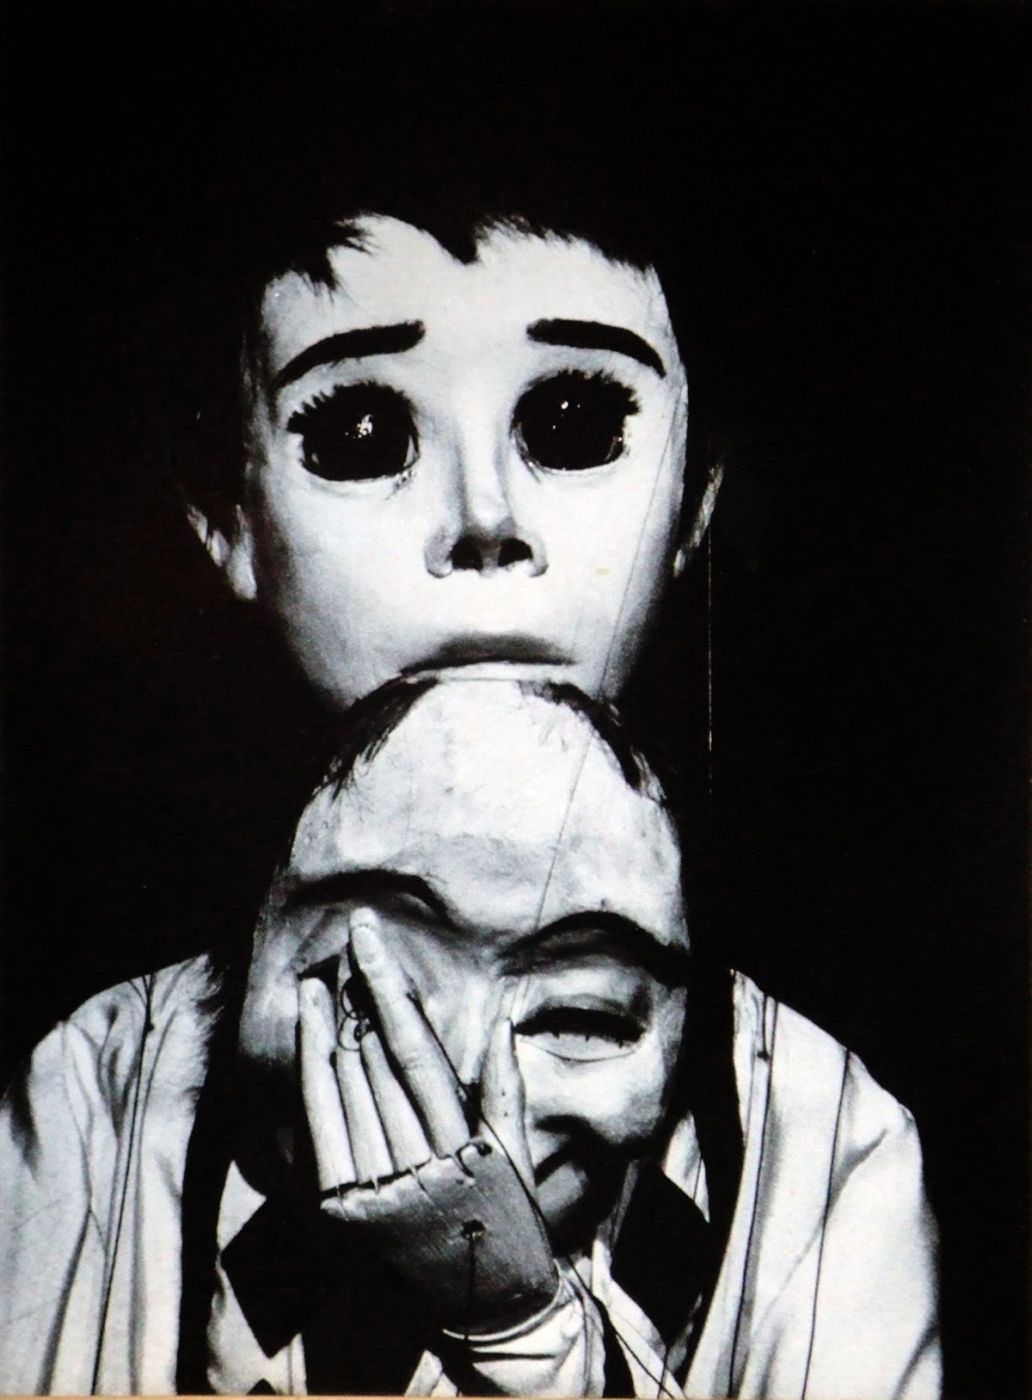 Daniel Frasnay, “Marionette”, 1950 ca.